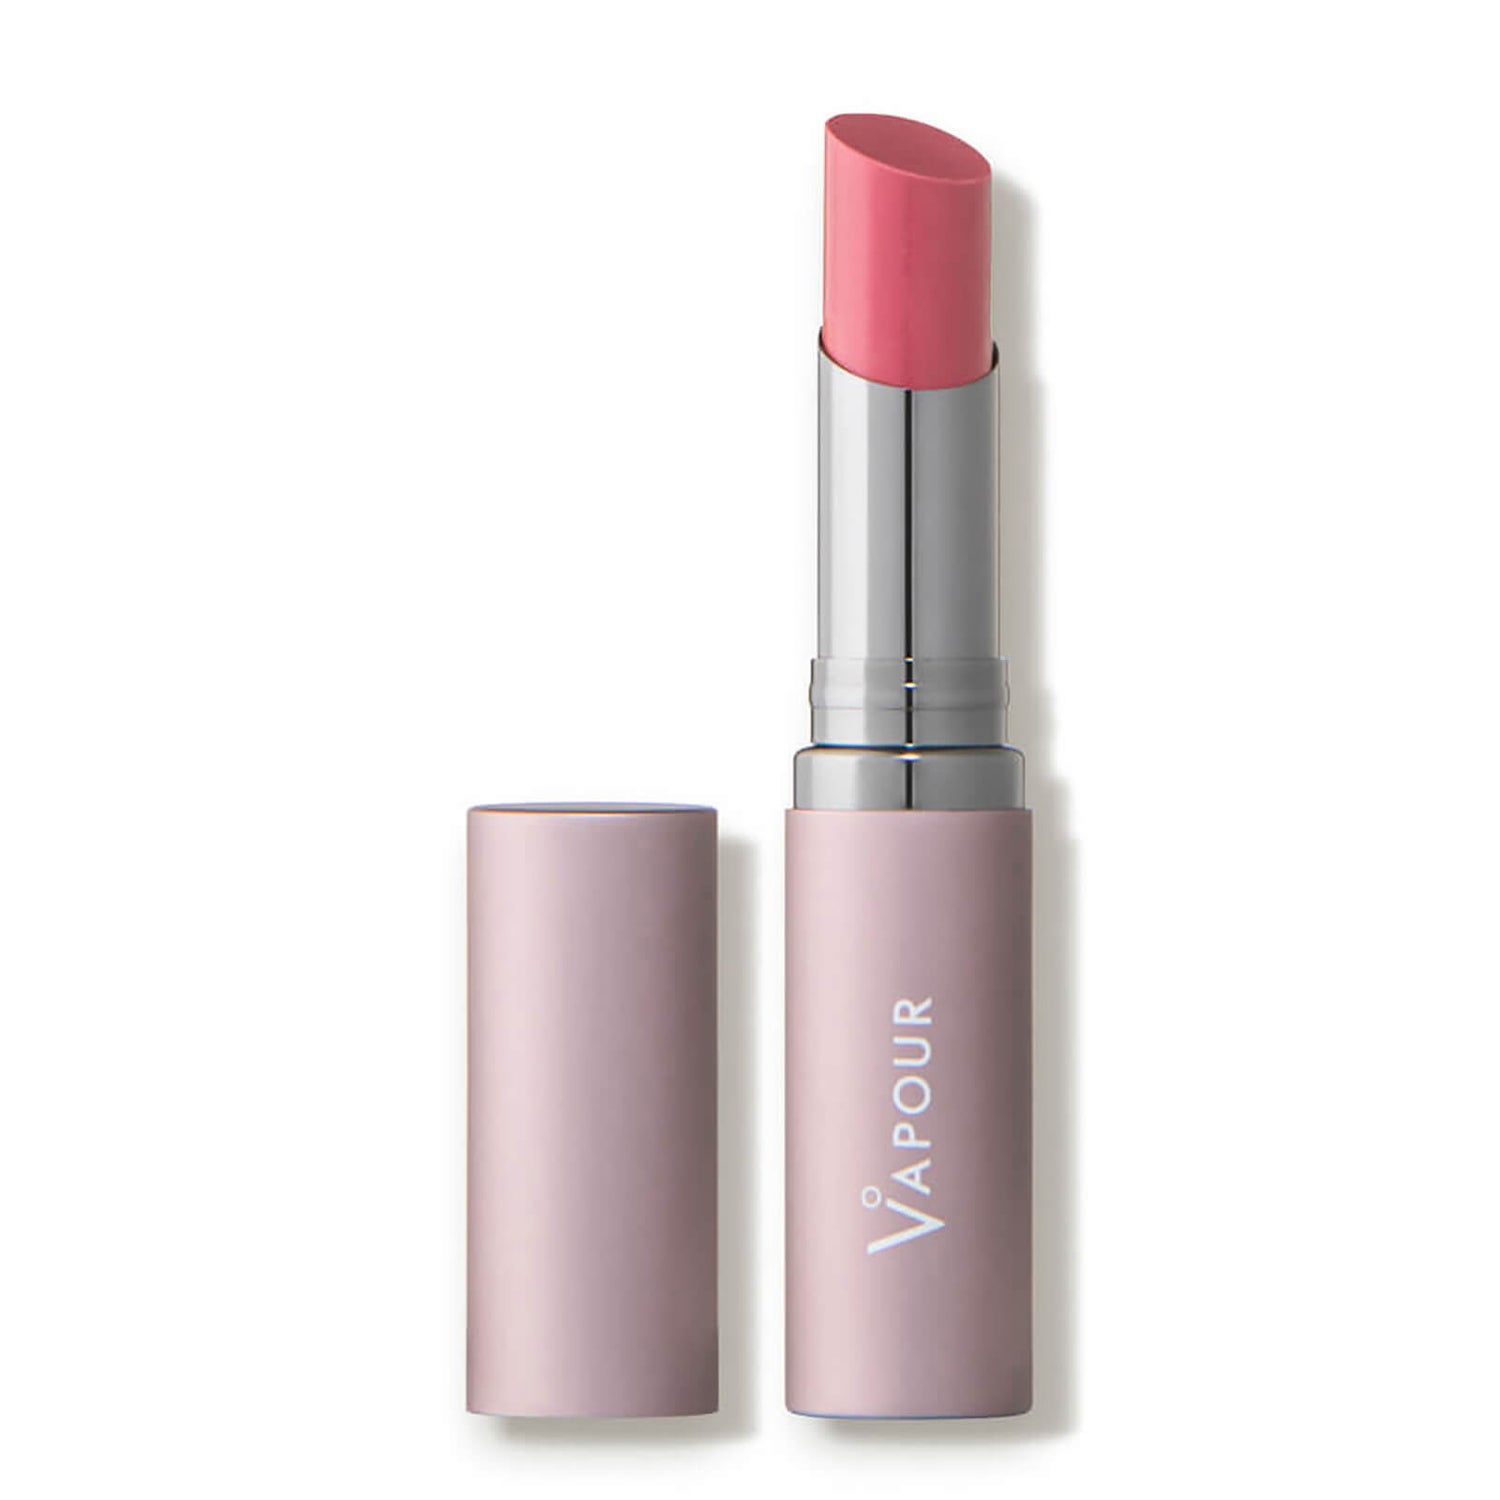 Vapour Beauty Lip Nectar - Desire 0.12 oz (worth $28)